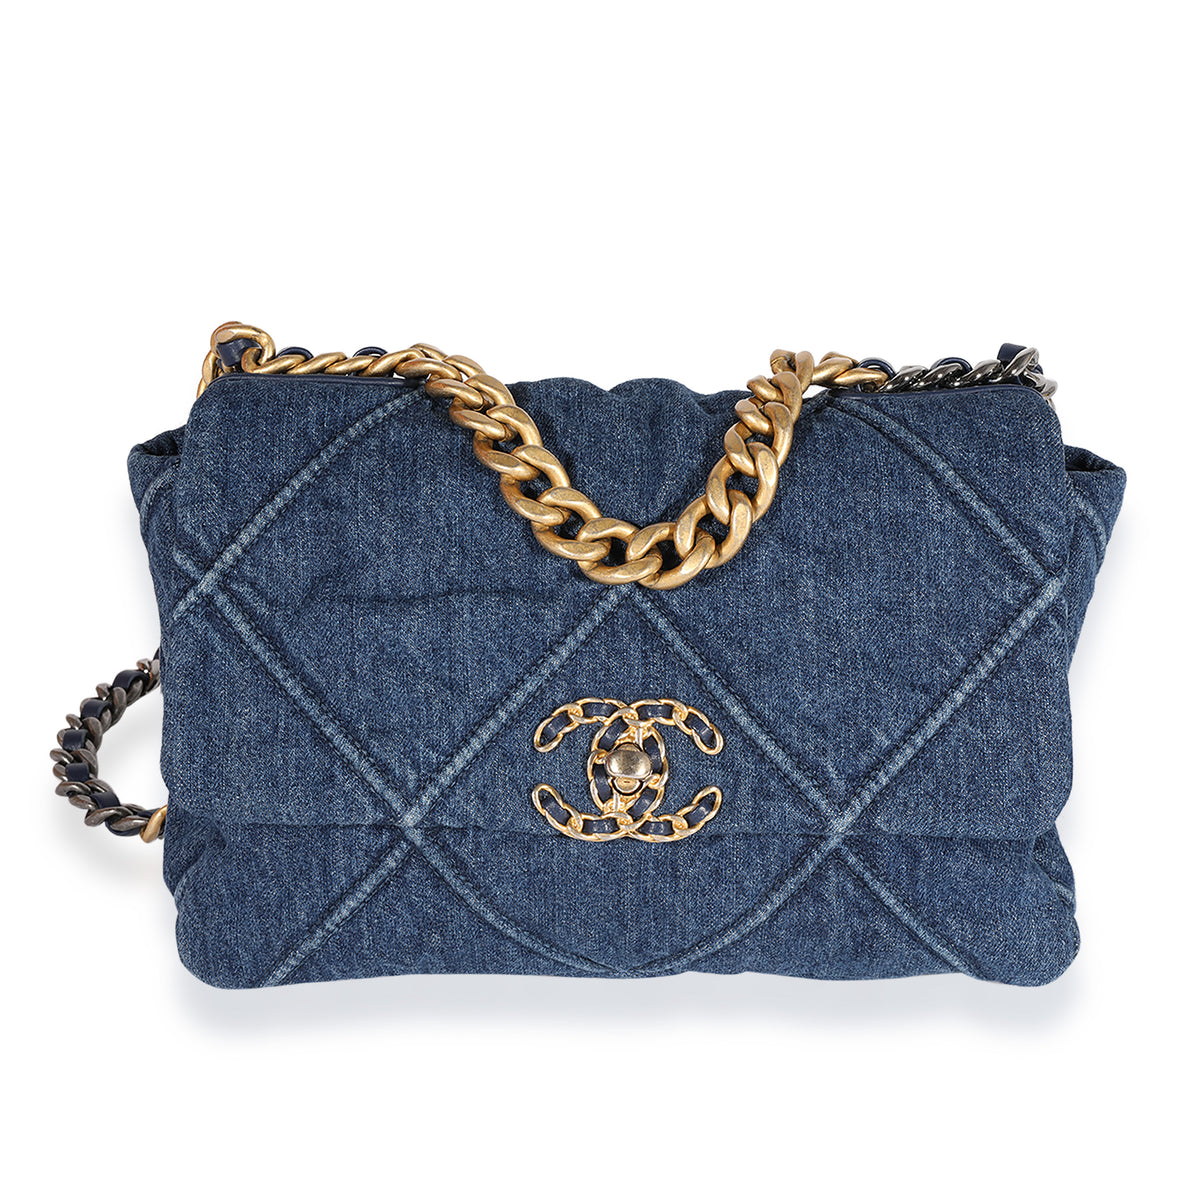 Handbag Chanel Blue in Denim - Jeans - 20933167